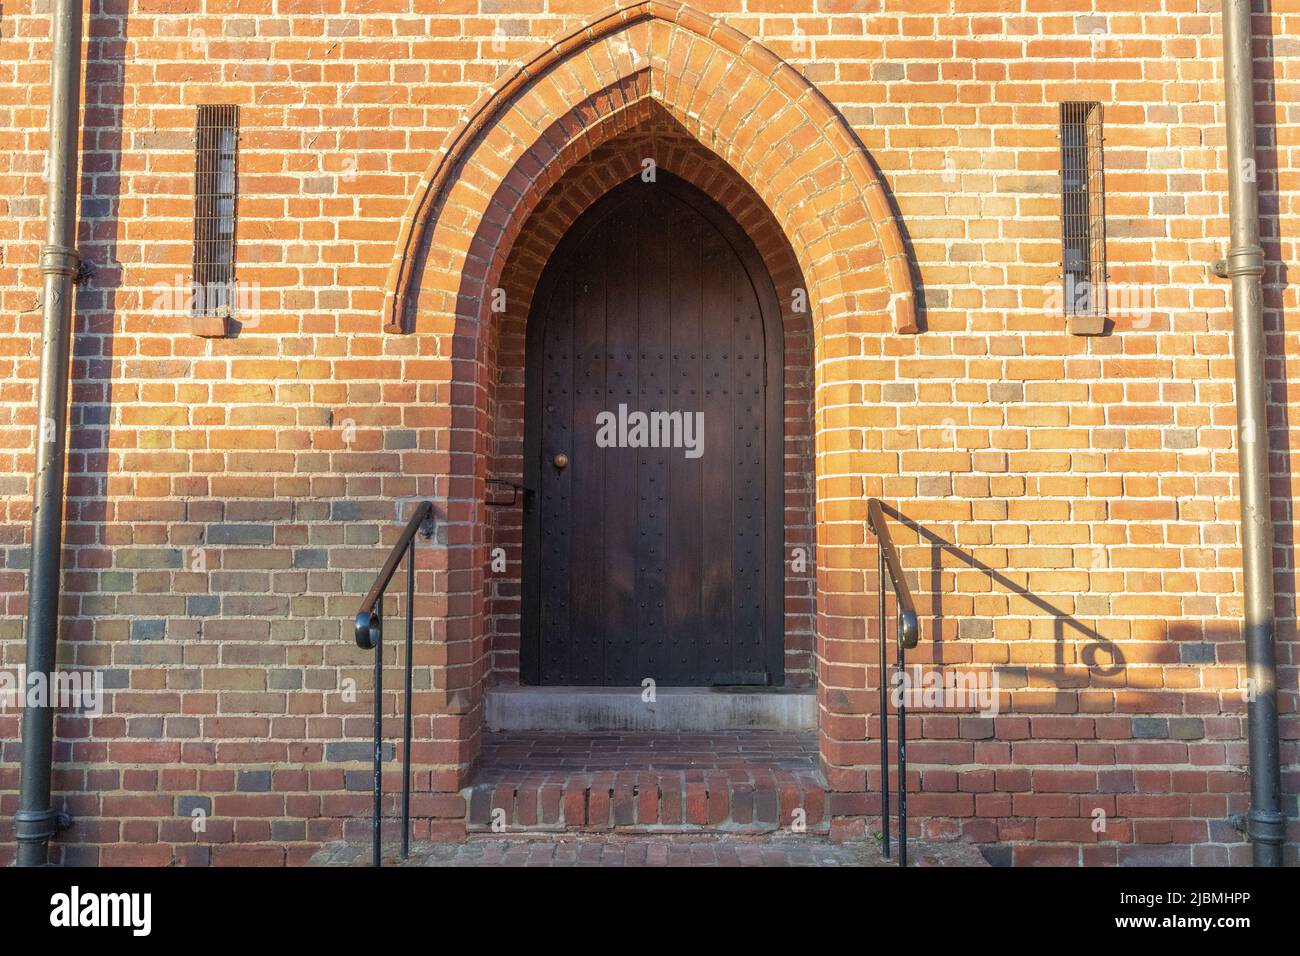 Church doorway, metal railings and red bricks. Stock Photo